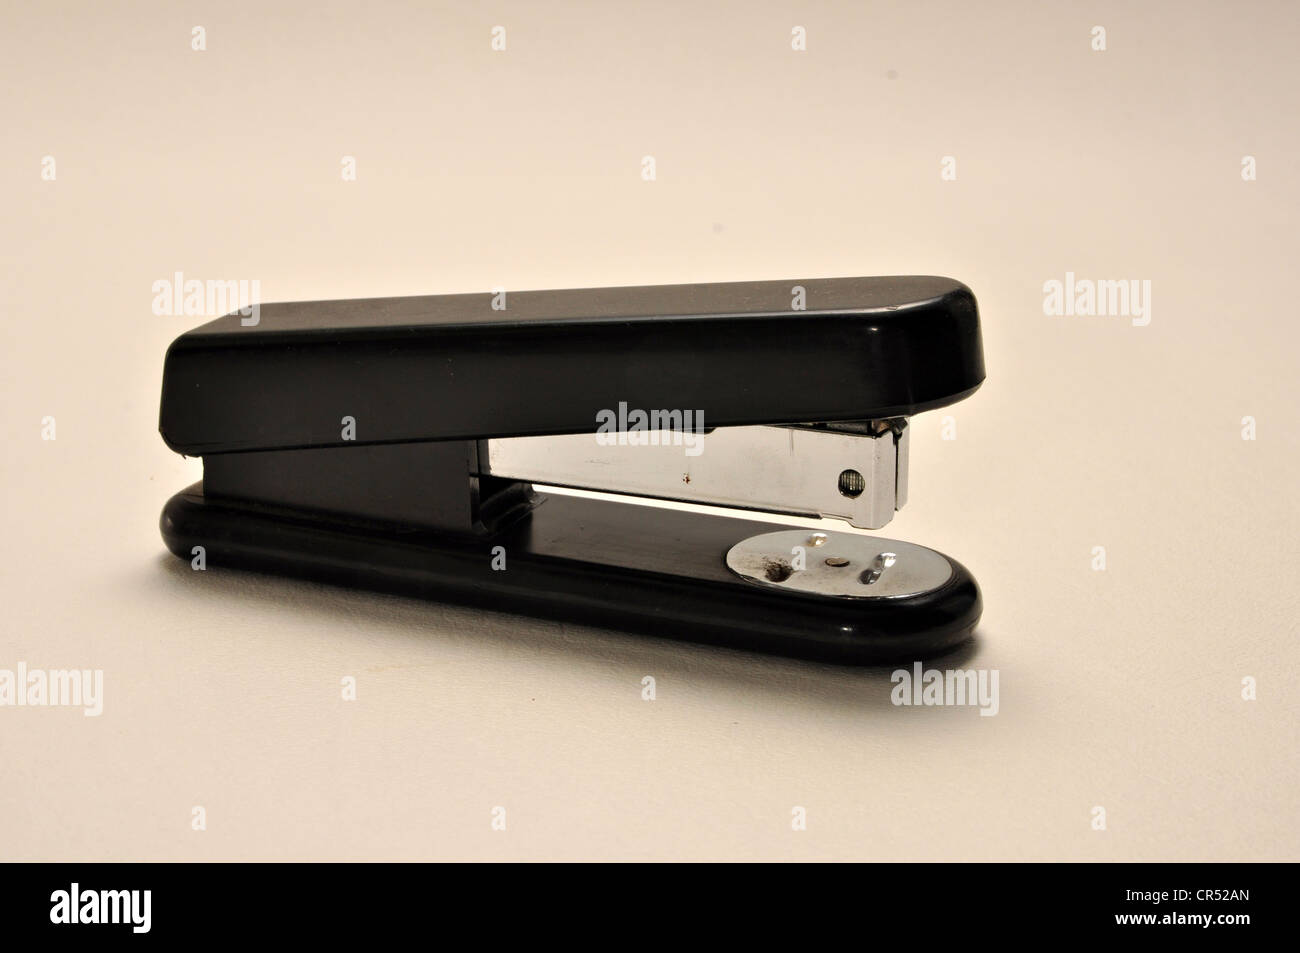 A black stapler is on a plain white background. Stock Photo